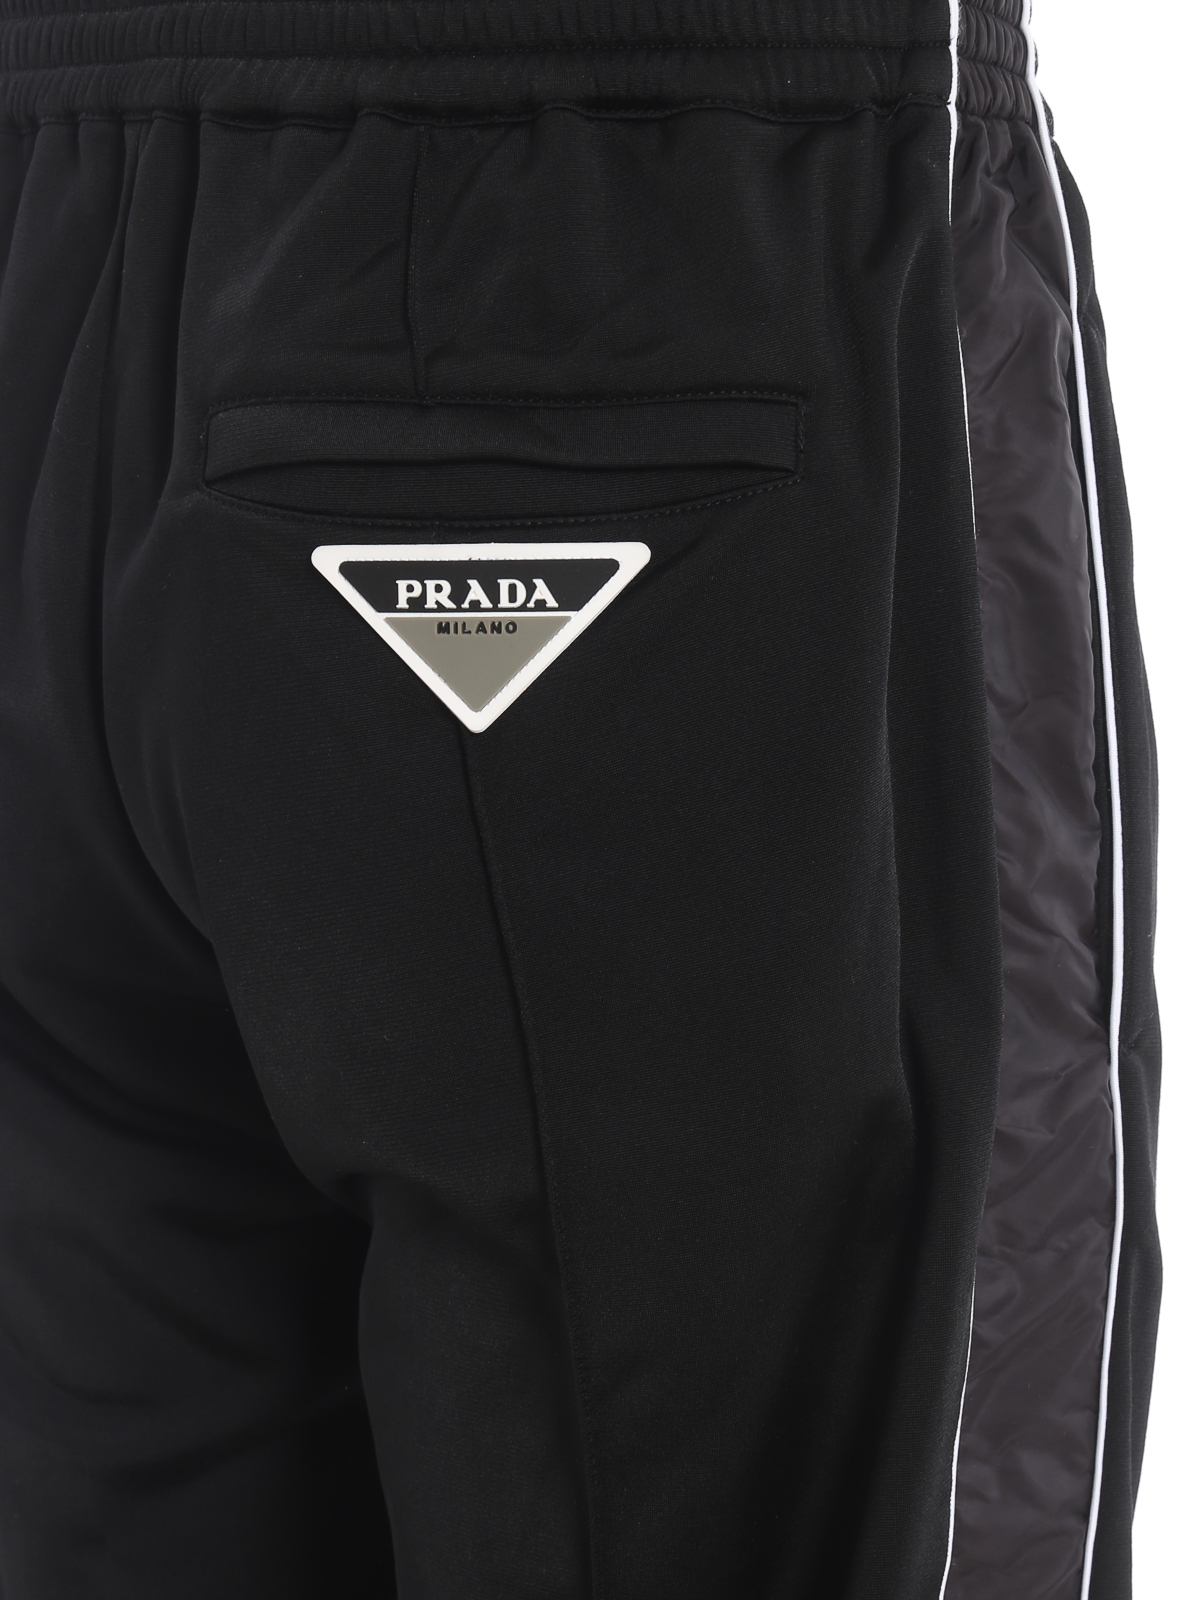 Details more than 76 prada track pants - in.eteachers